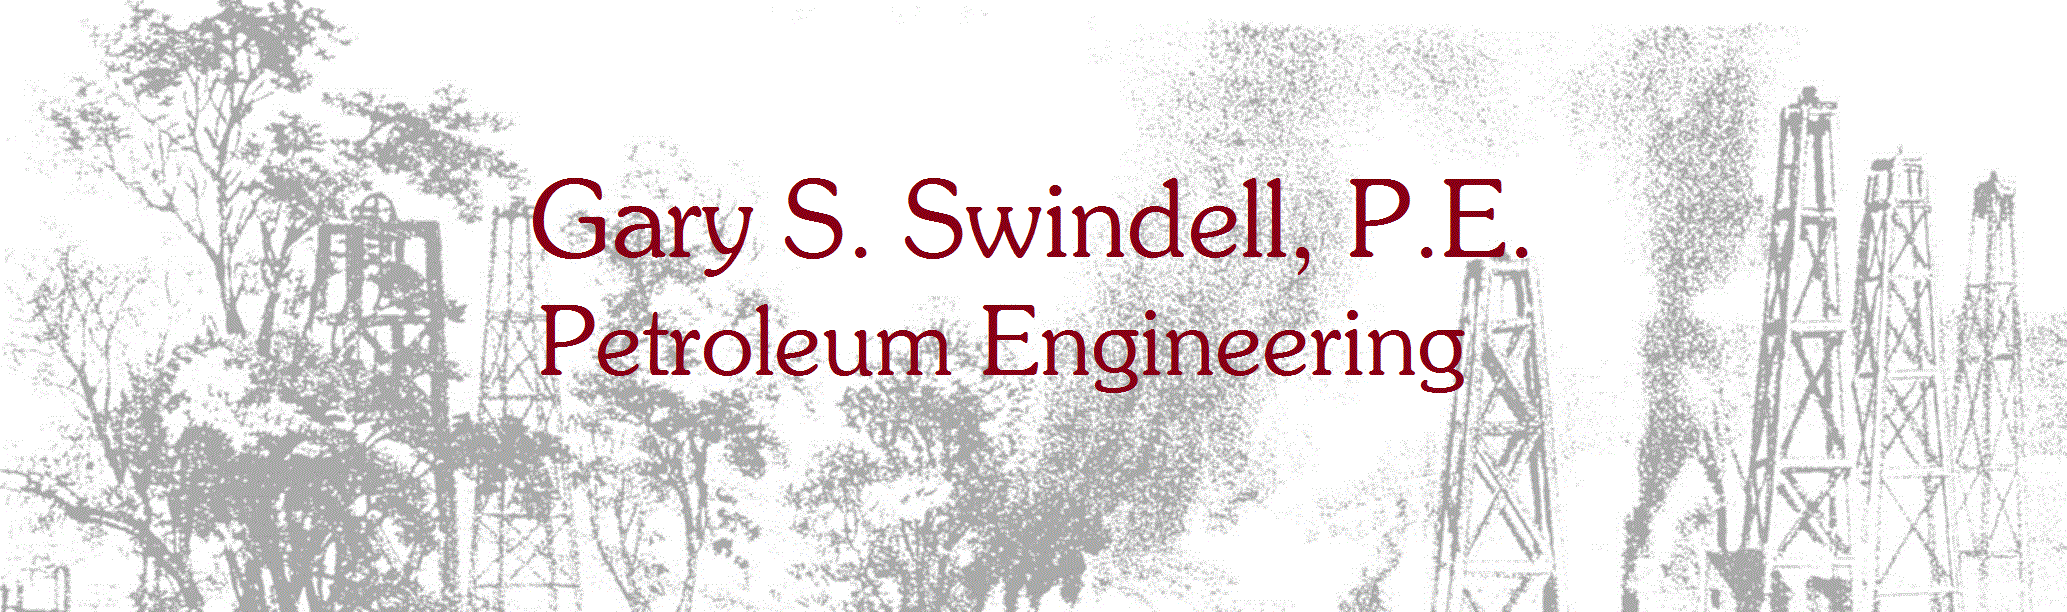 Gary S. Swindell, Petroleum Engineering